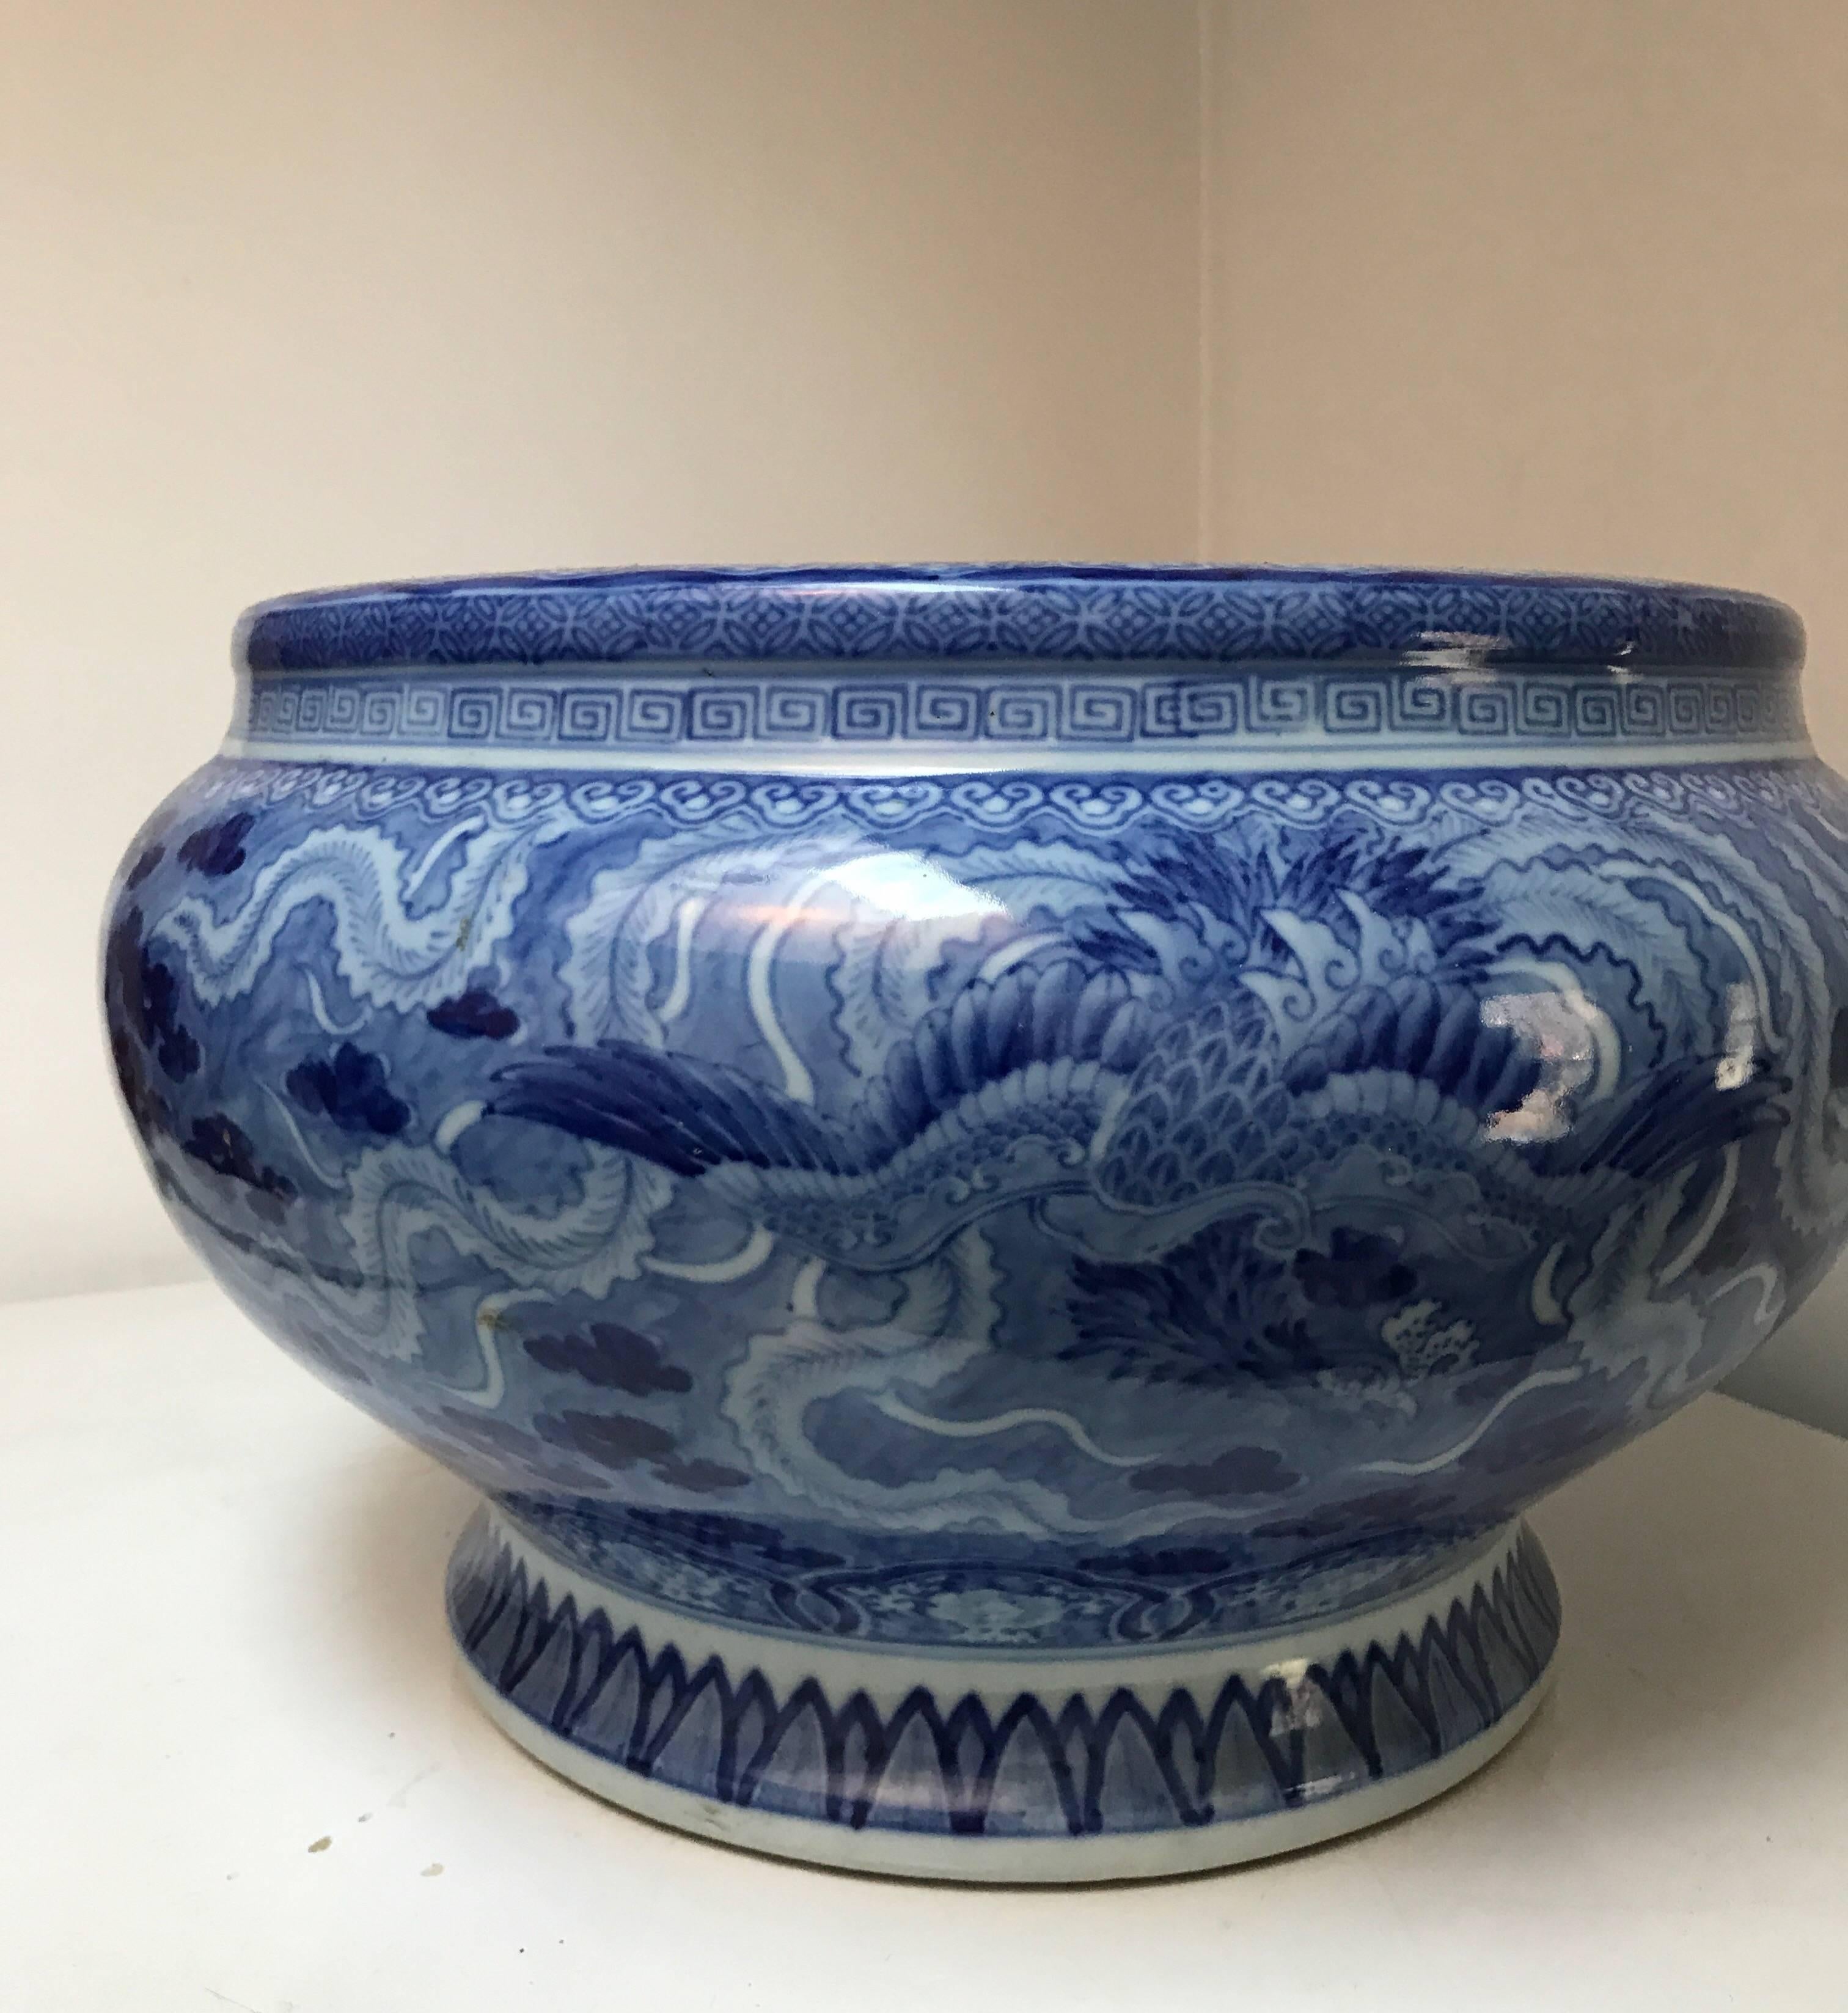 Painted Japanese Blue and White Ceramic Fishbowl Planter Jardinière Cachepot